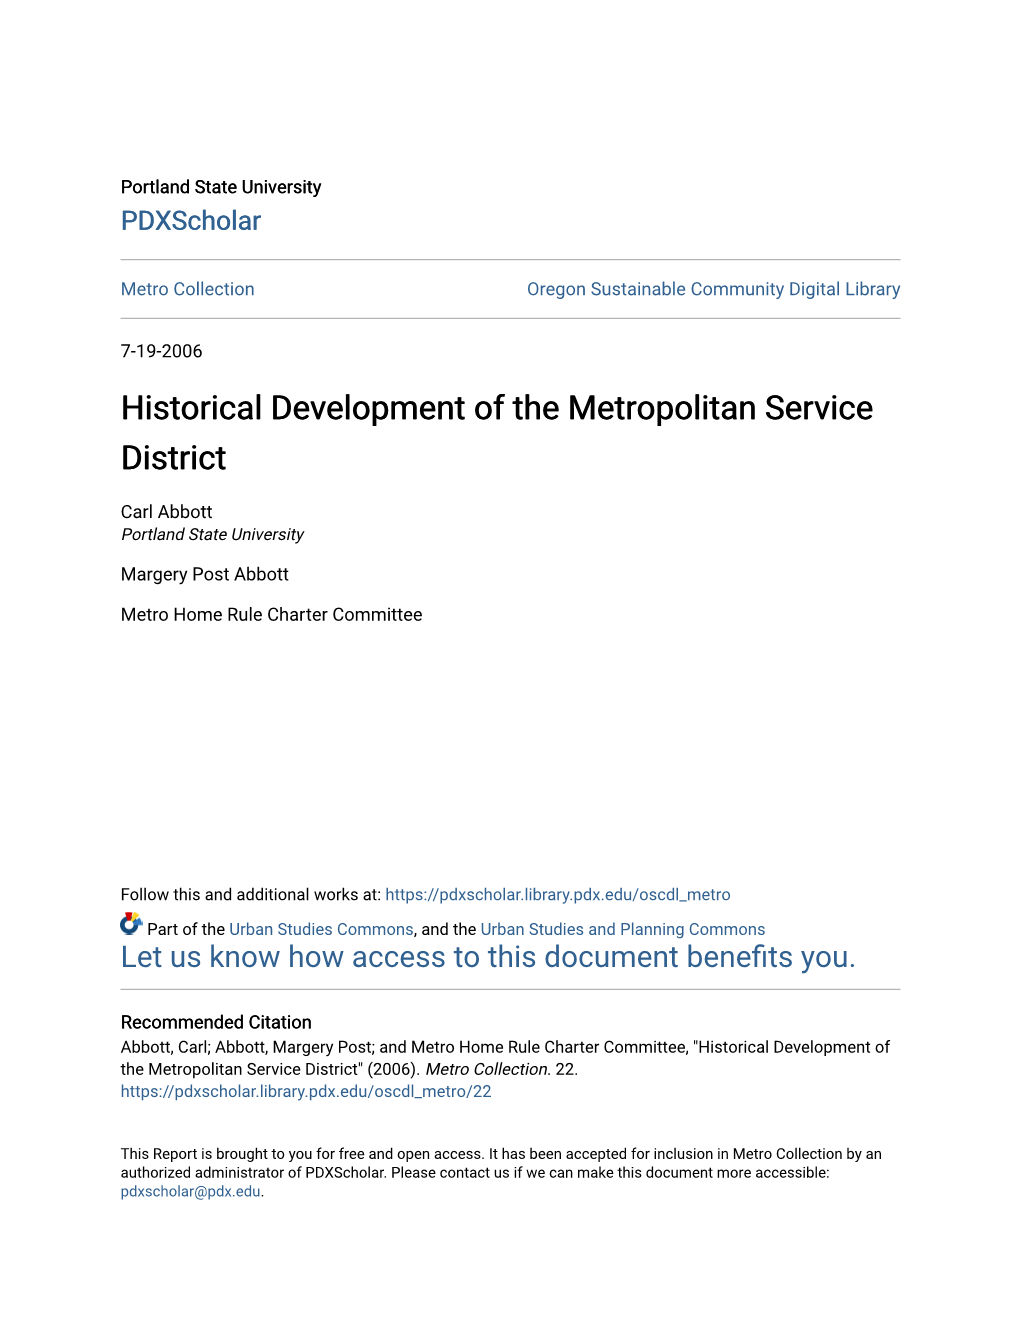 Historical Development of the Metropolitan Service District